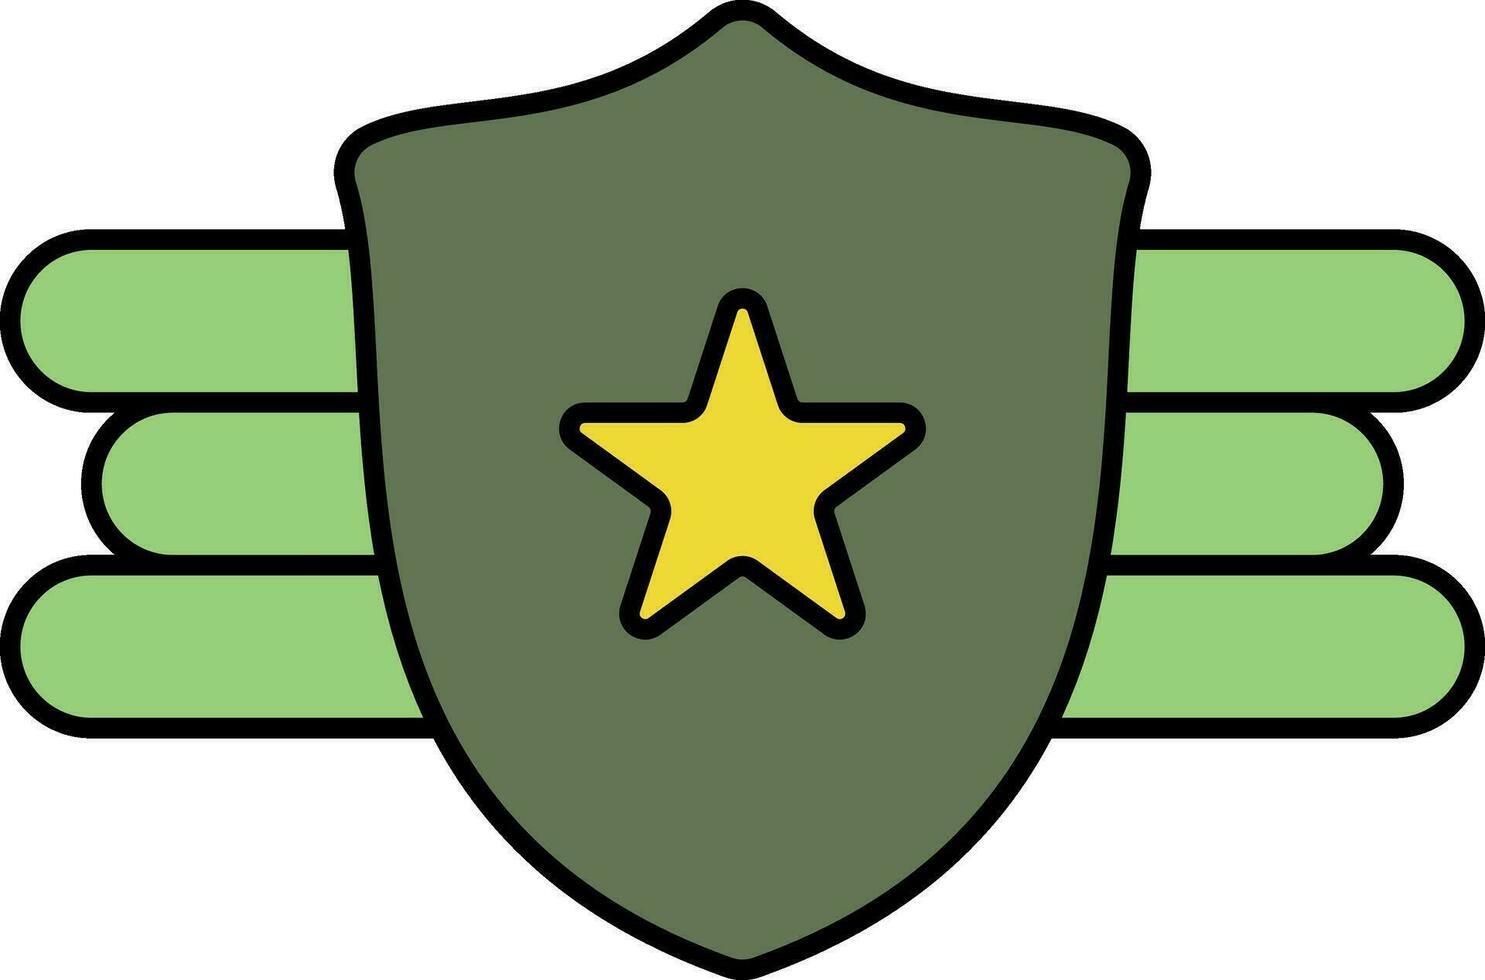 leger ster insigne icoon in groen en geel kleur. vector